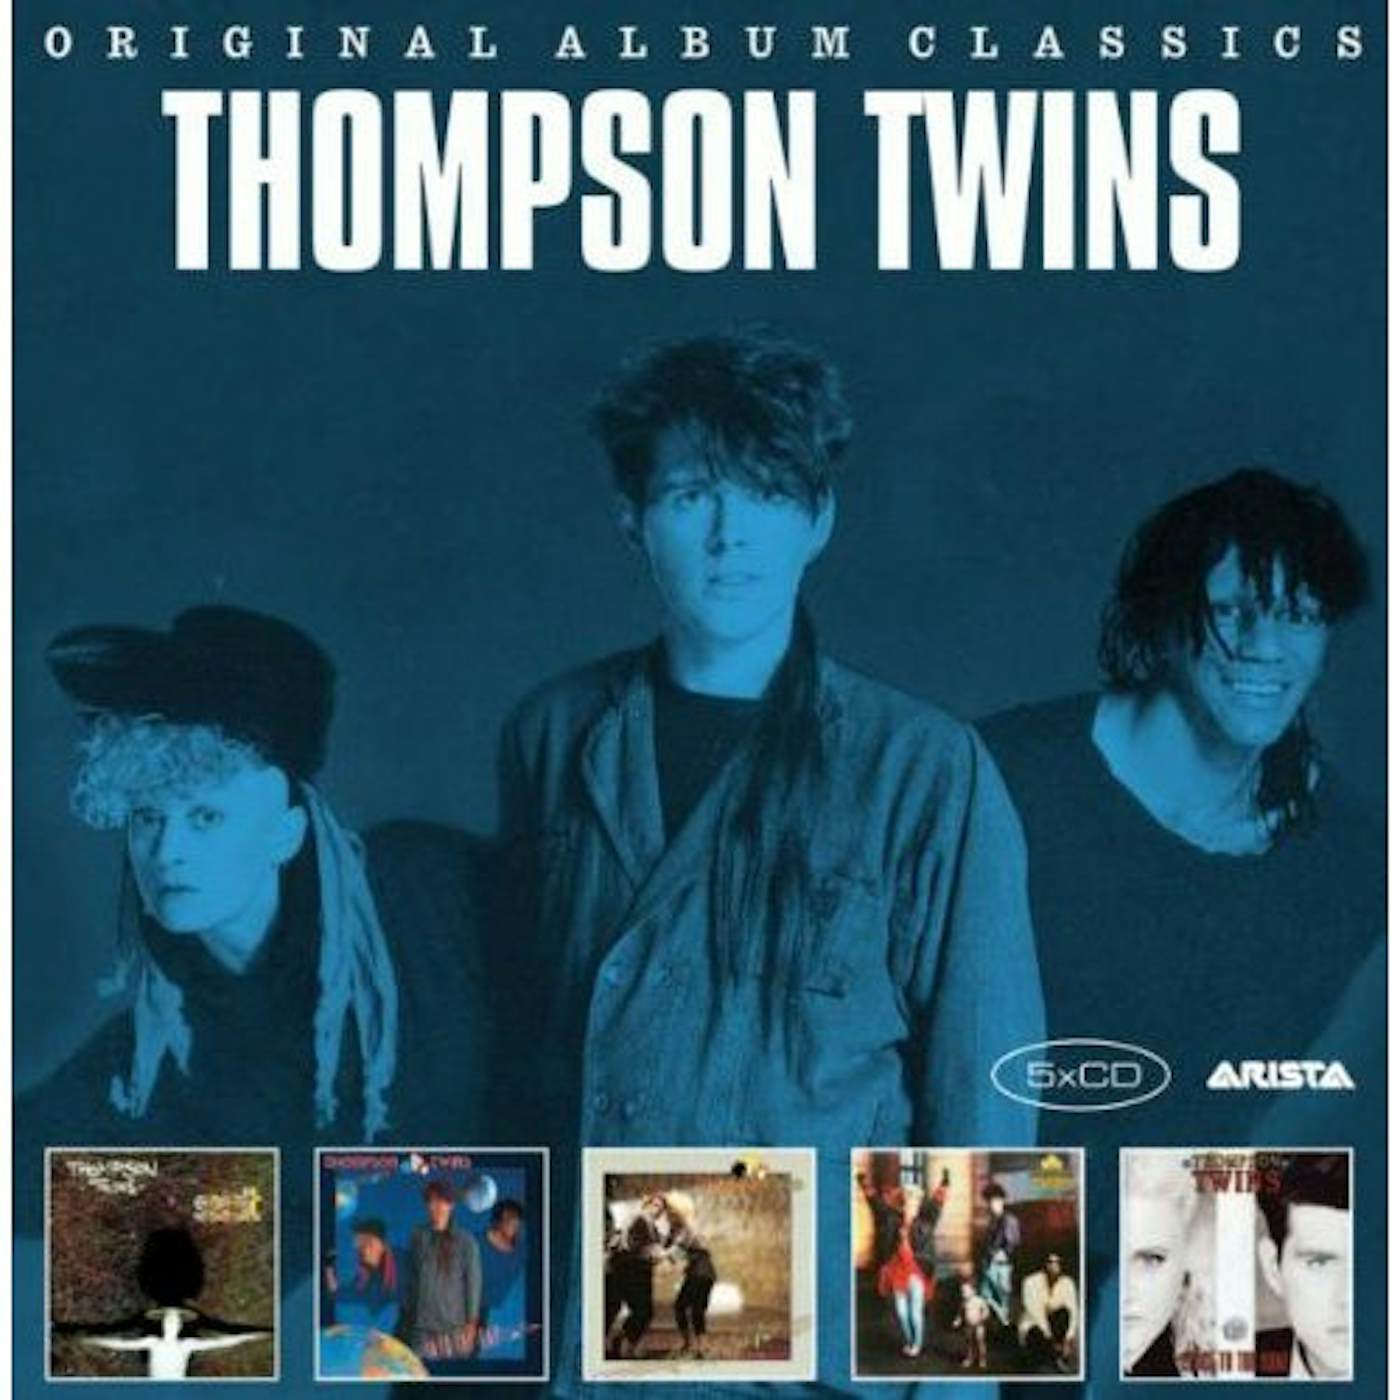 Thompson Twins ORIGINAL ALBUM CLASSICS CD